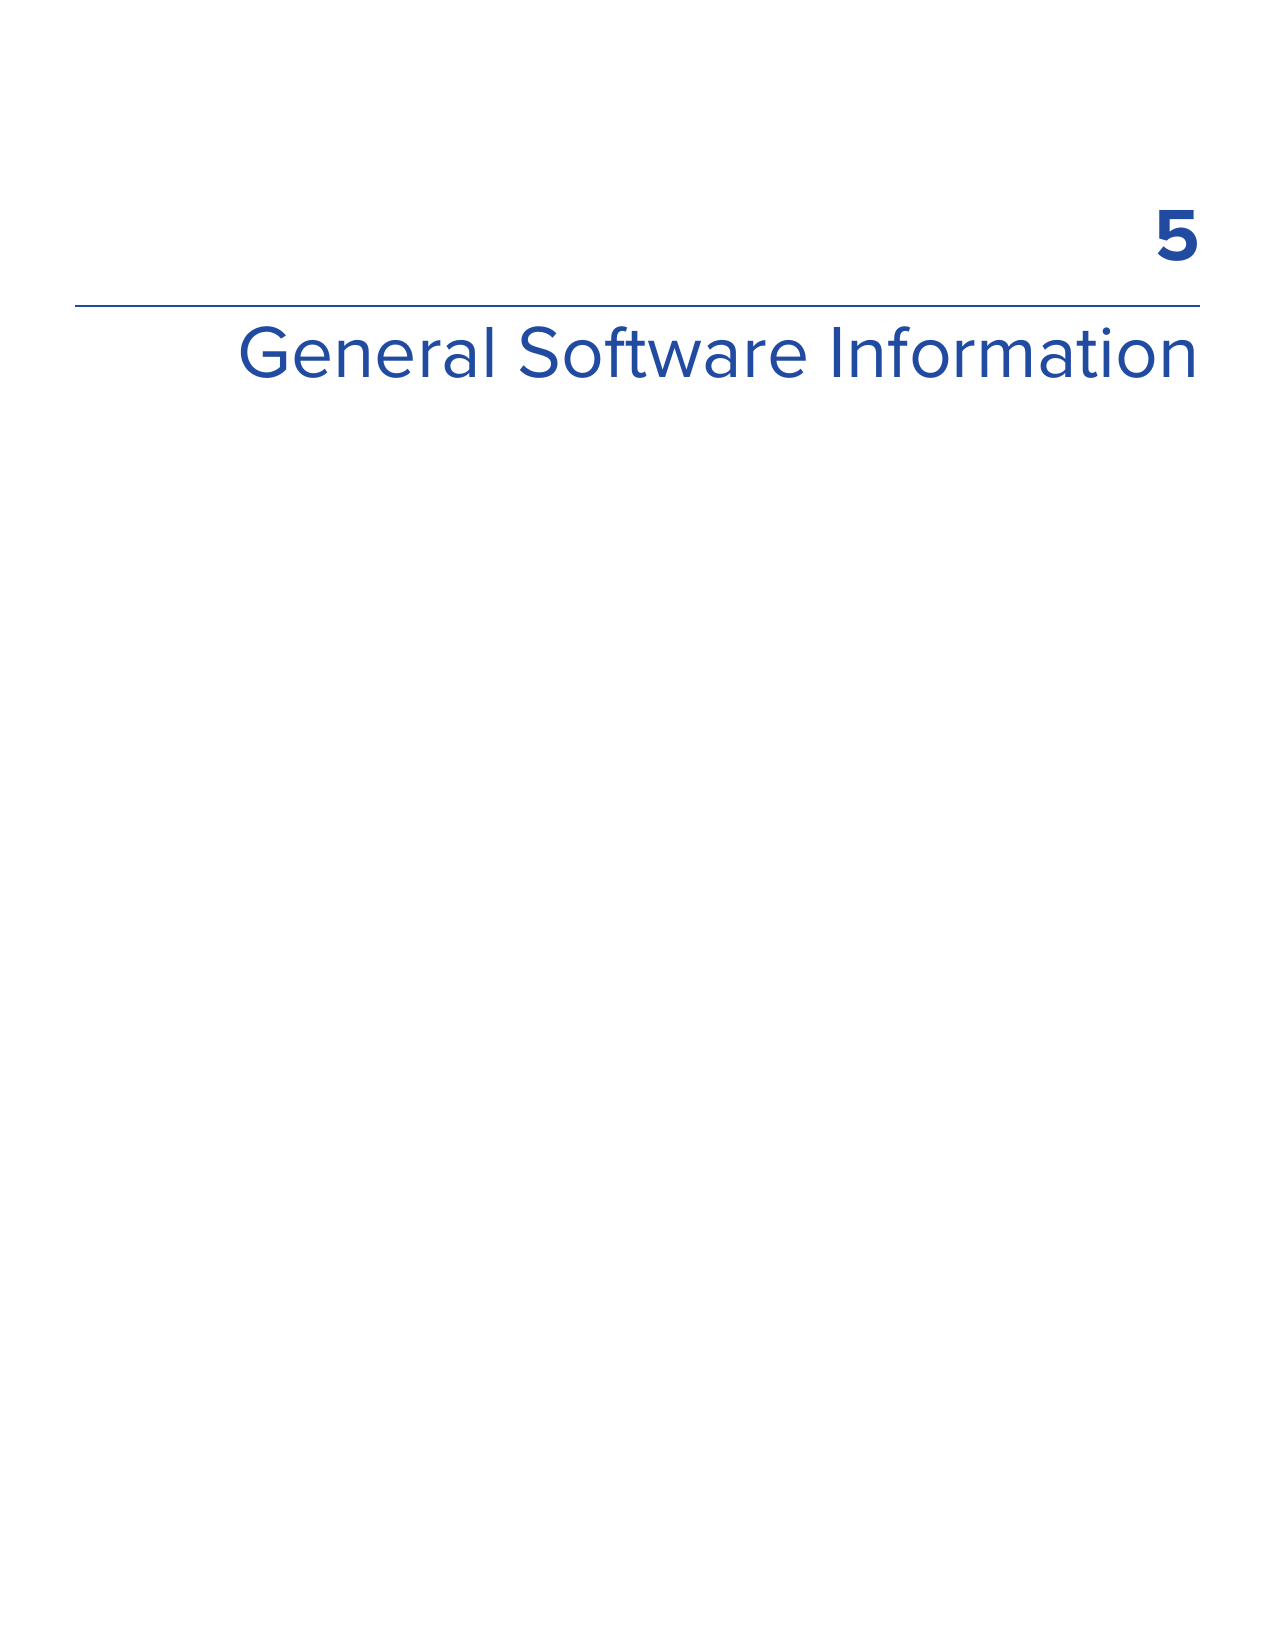 General Software Information5